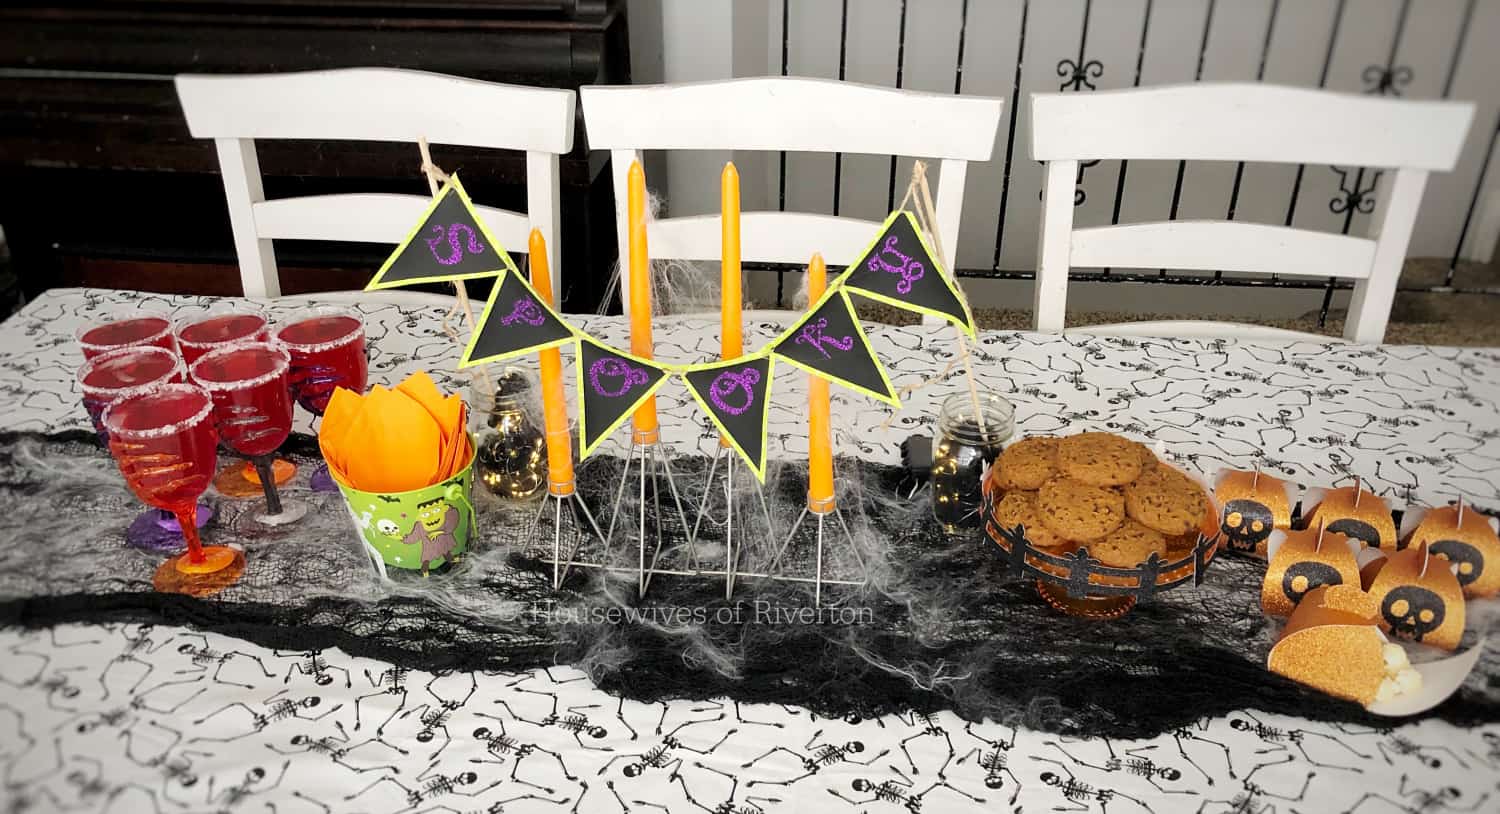 Easy Halloween Table Decor with Cricut | www.housewivesofriverton.com